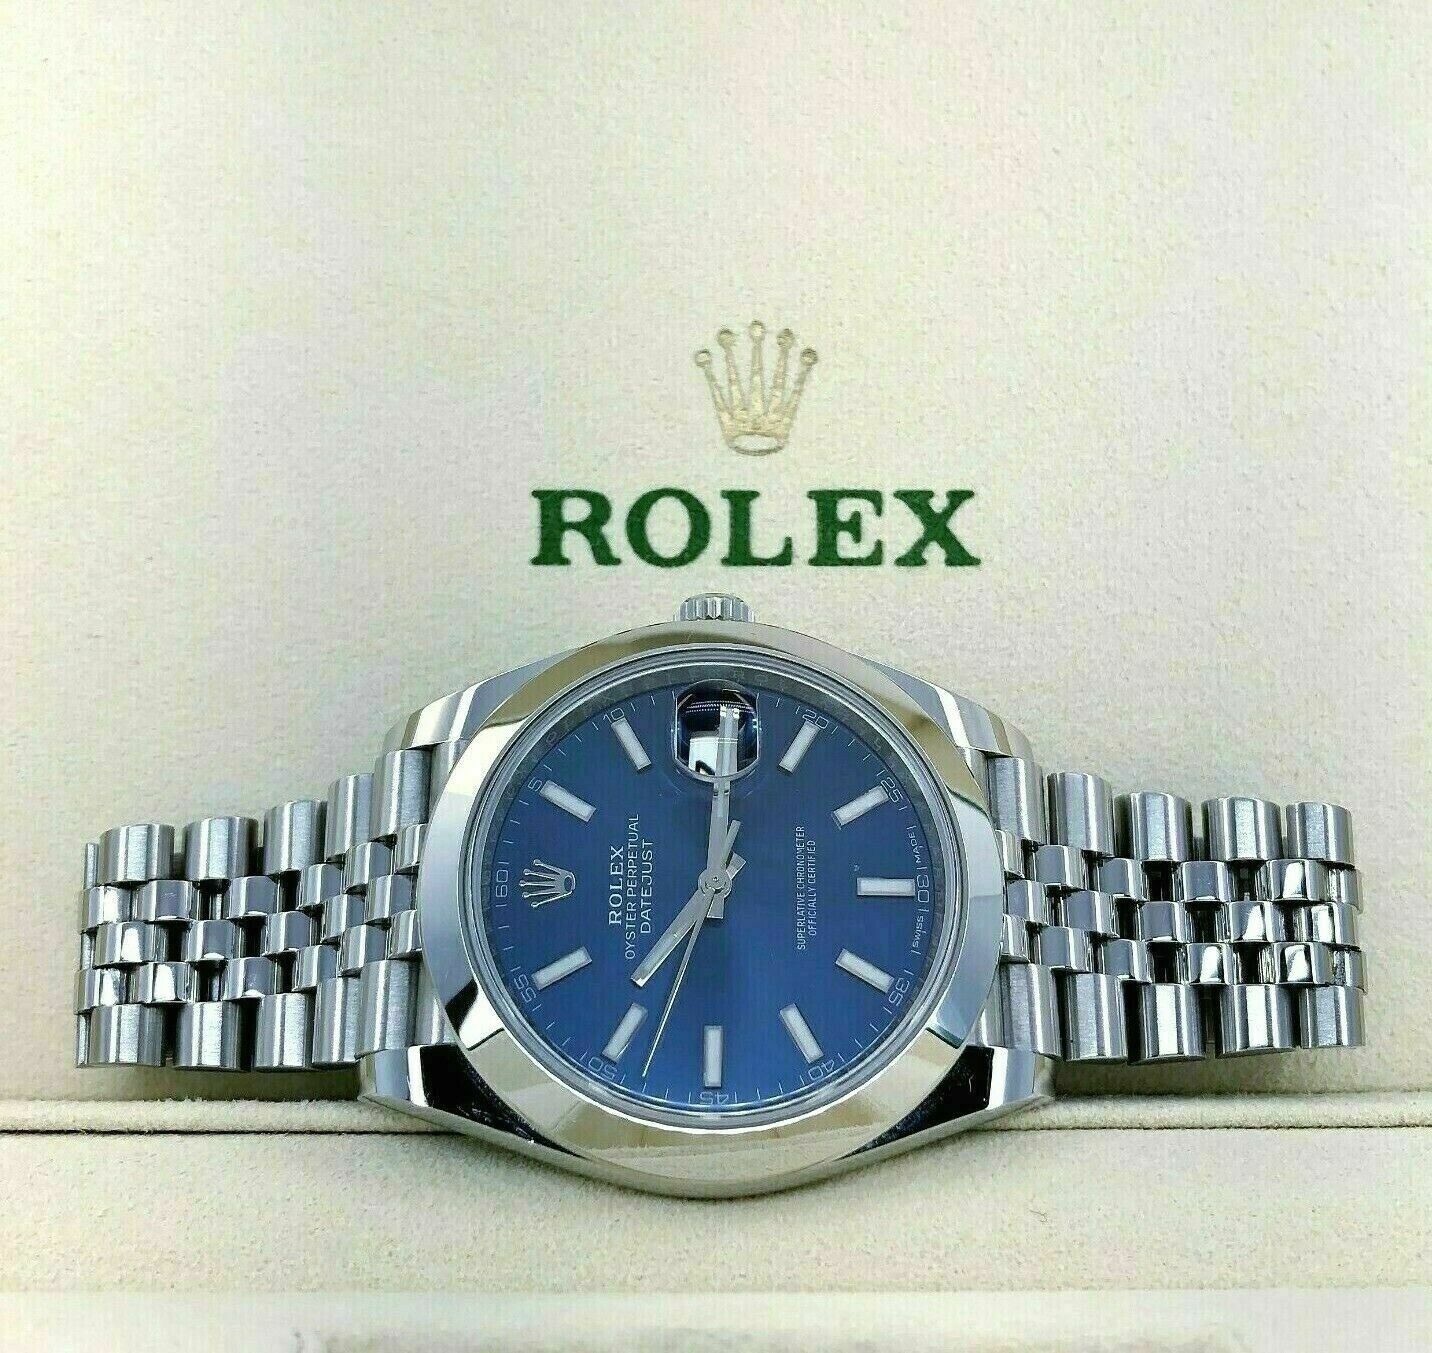 Rolex 41MM Datejust II Watch Stainless Steel Oyster Jubilee Band Ref # 126300